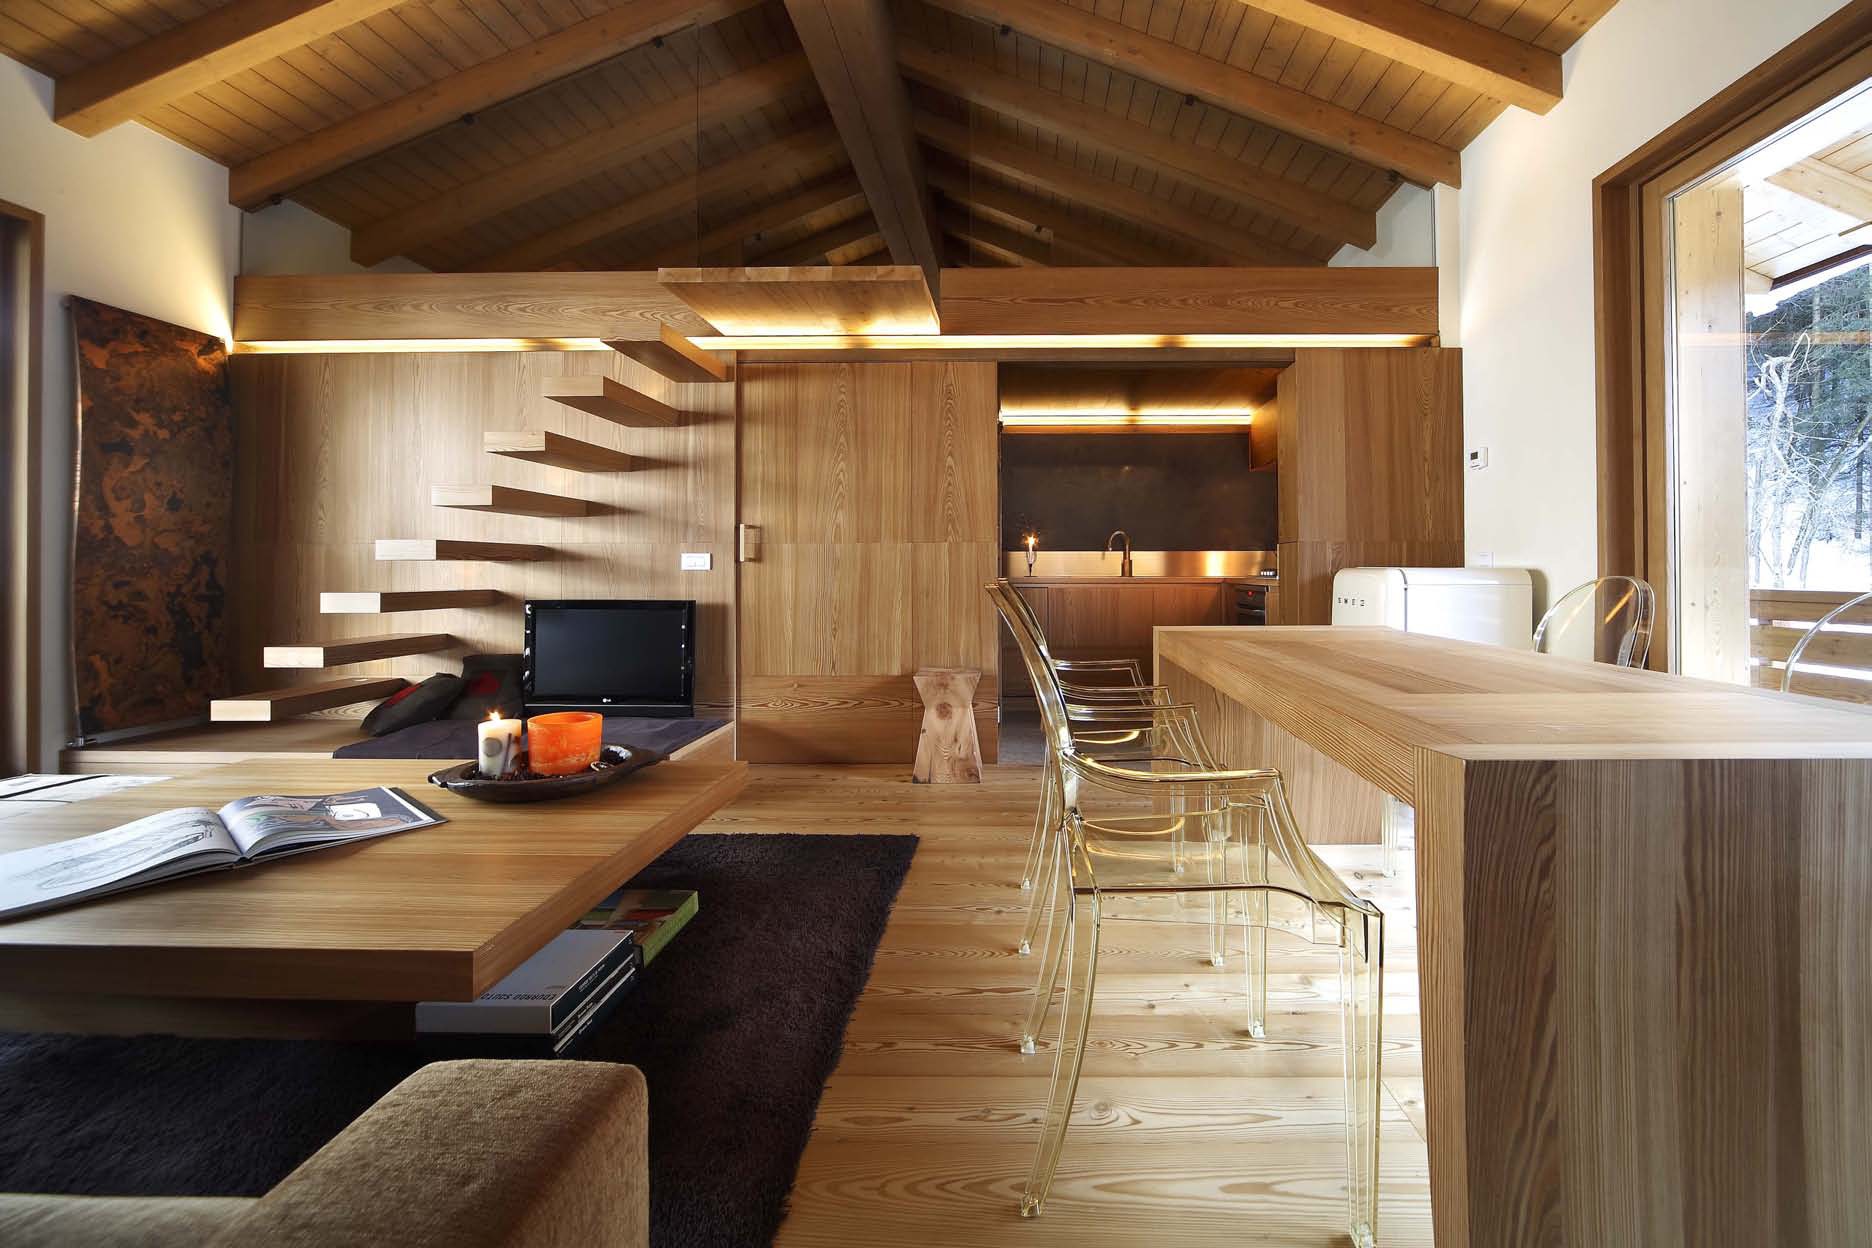 Photo Gallery: Model of Modern Wooden Minimalist Home Design - Interior ...